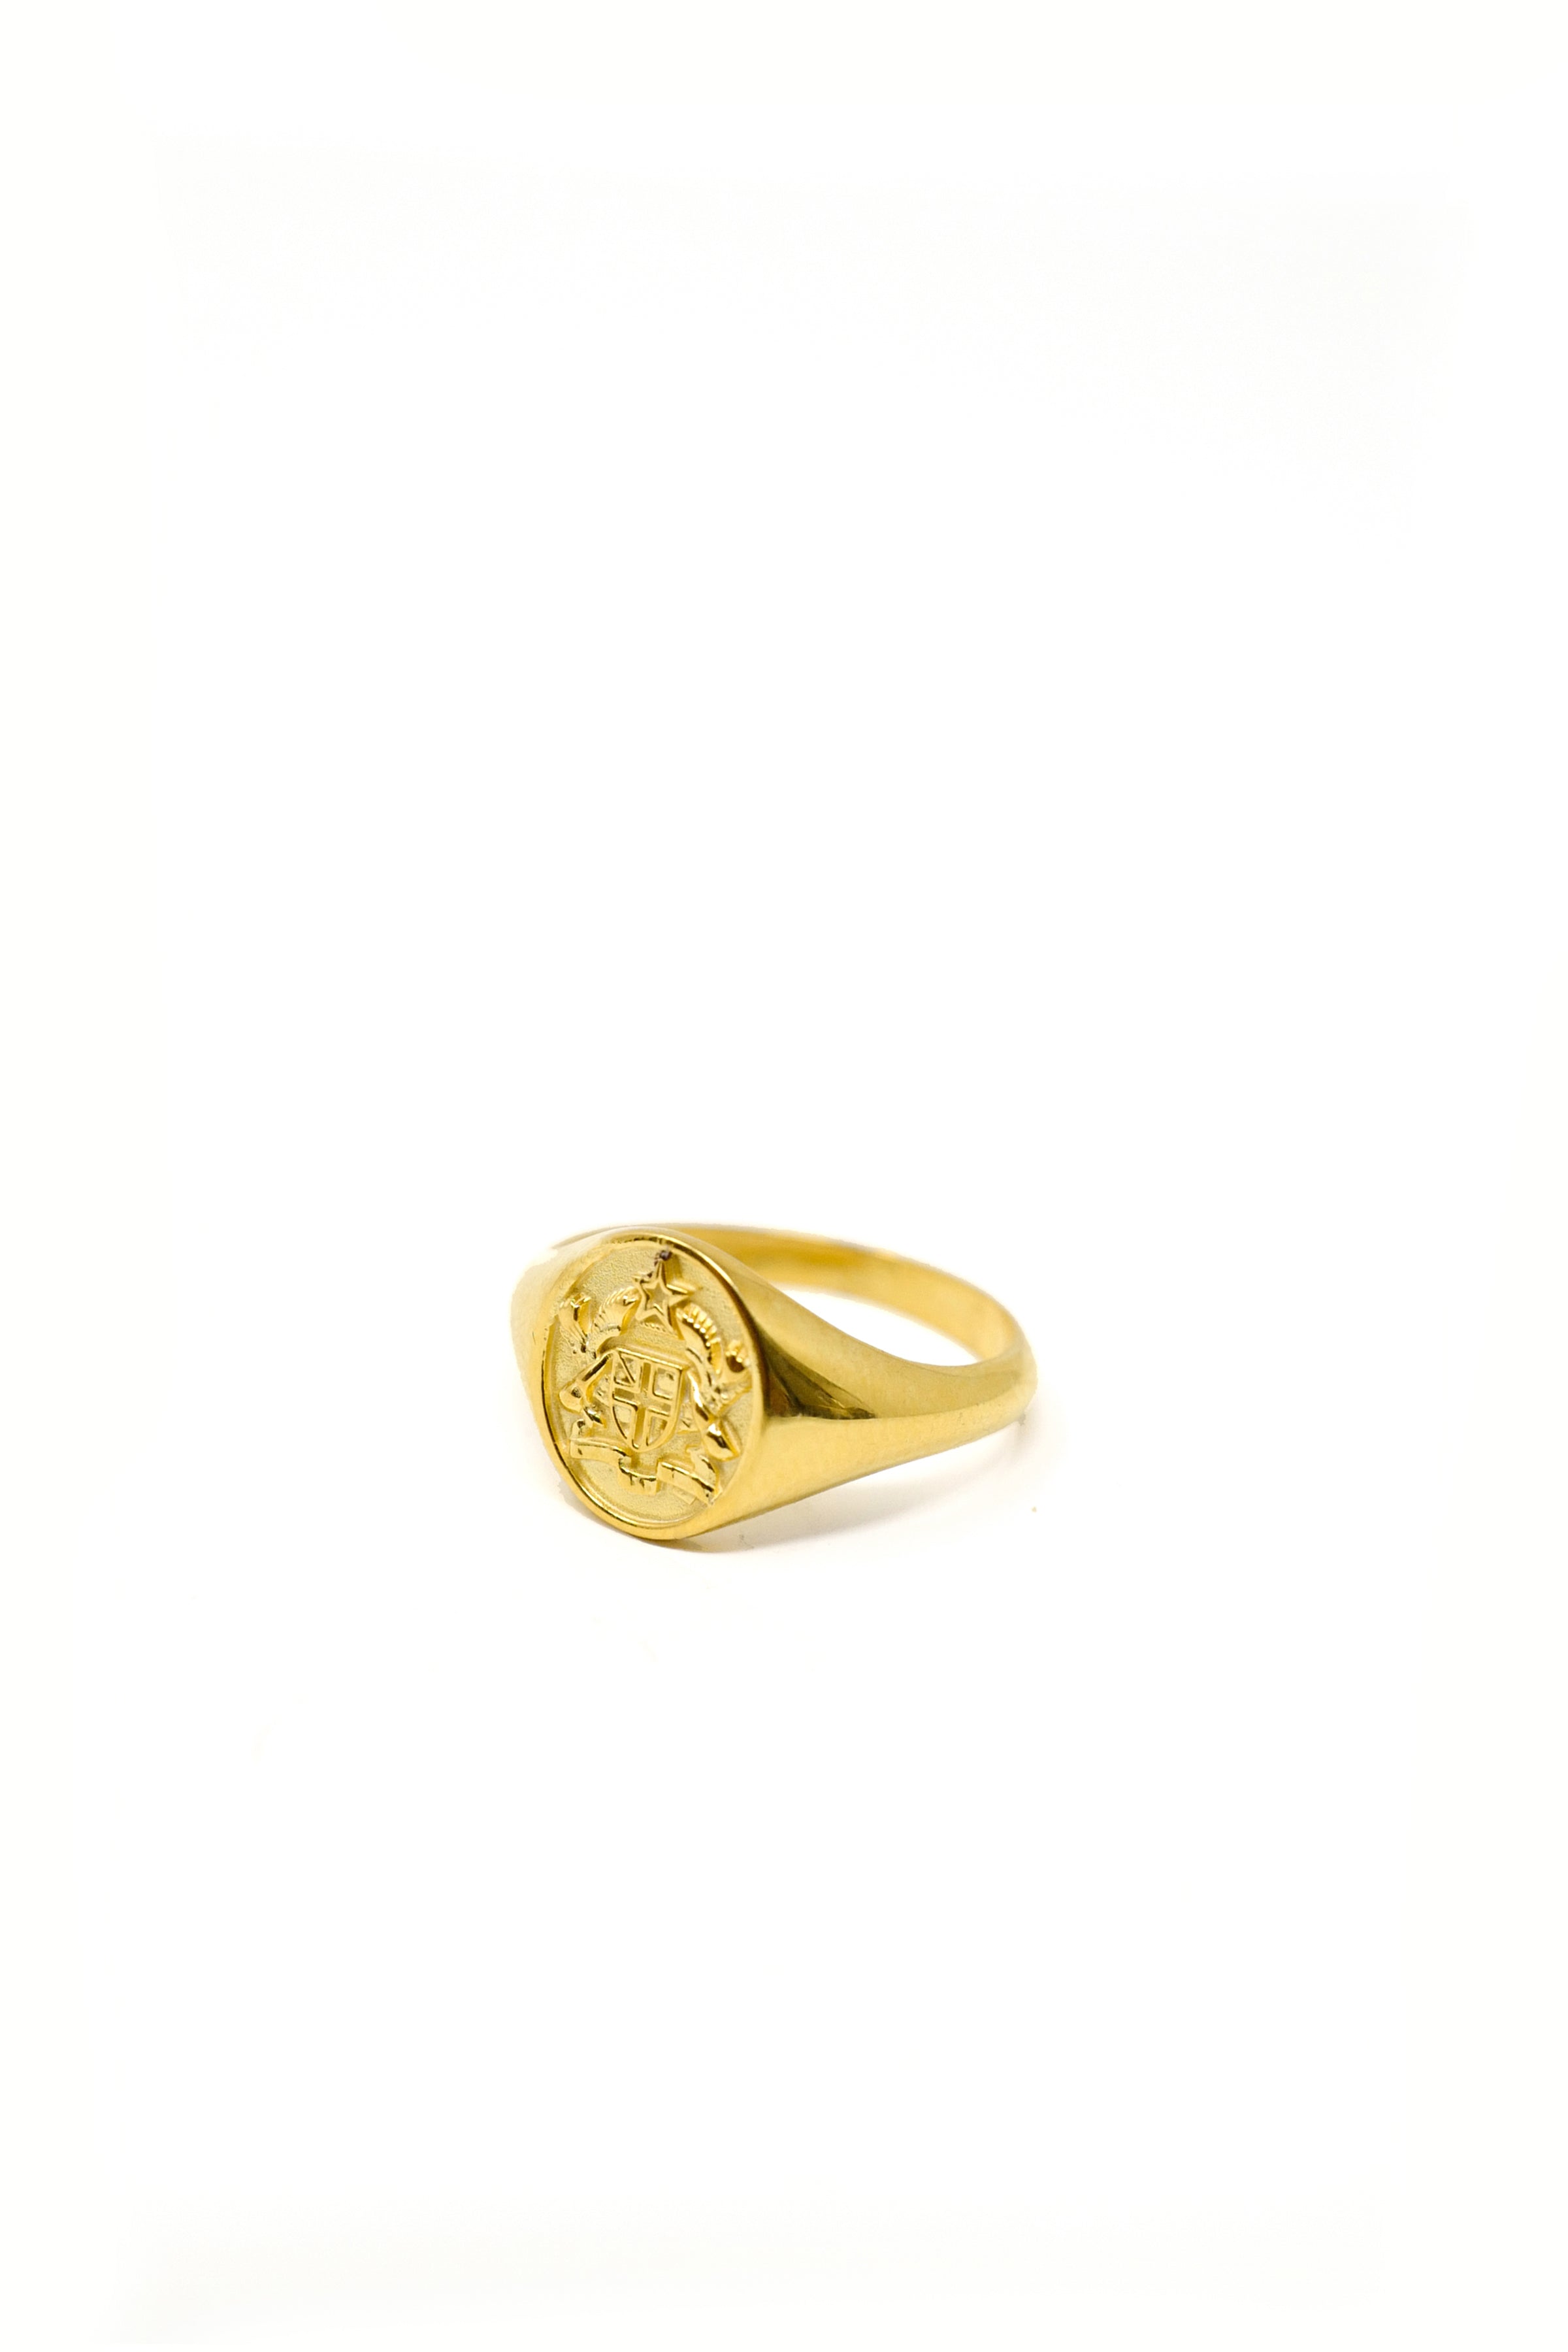 Gents 10K Gold Family Crest Signet Ring